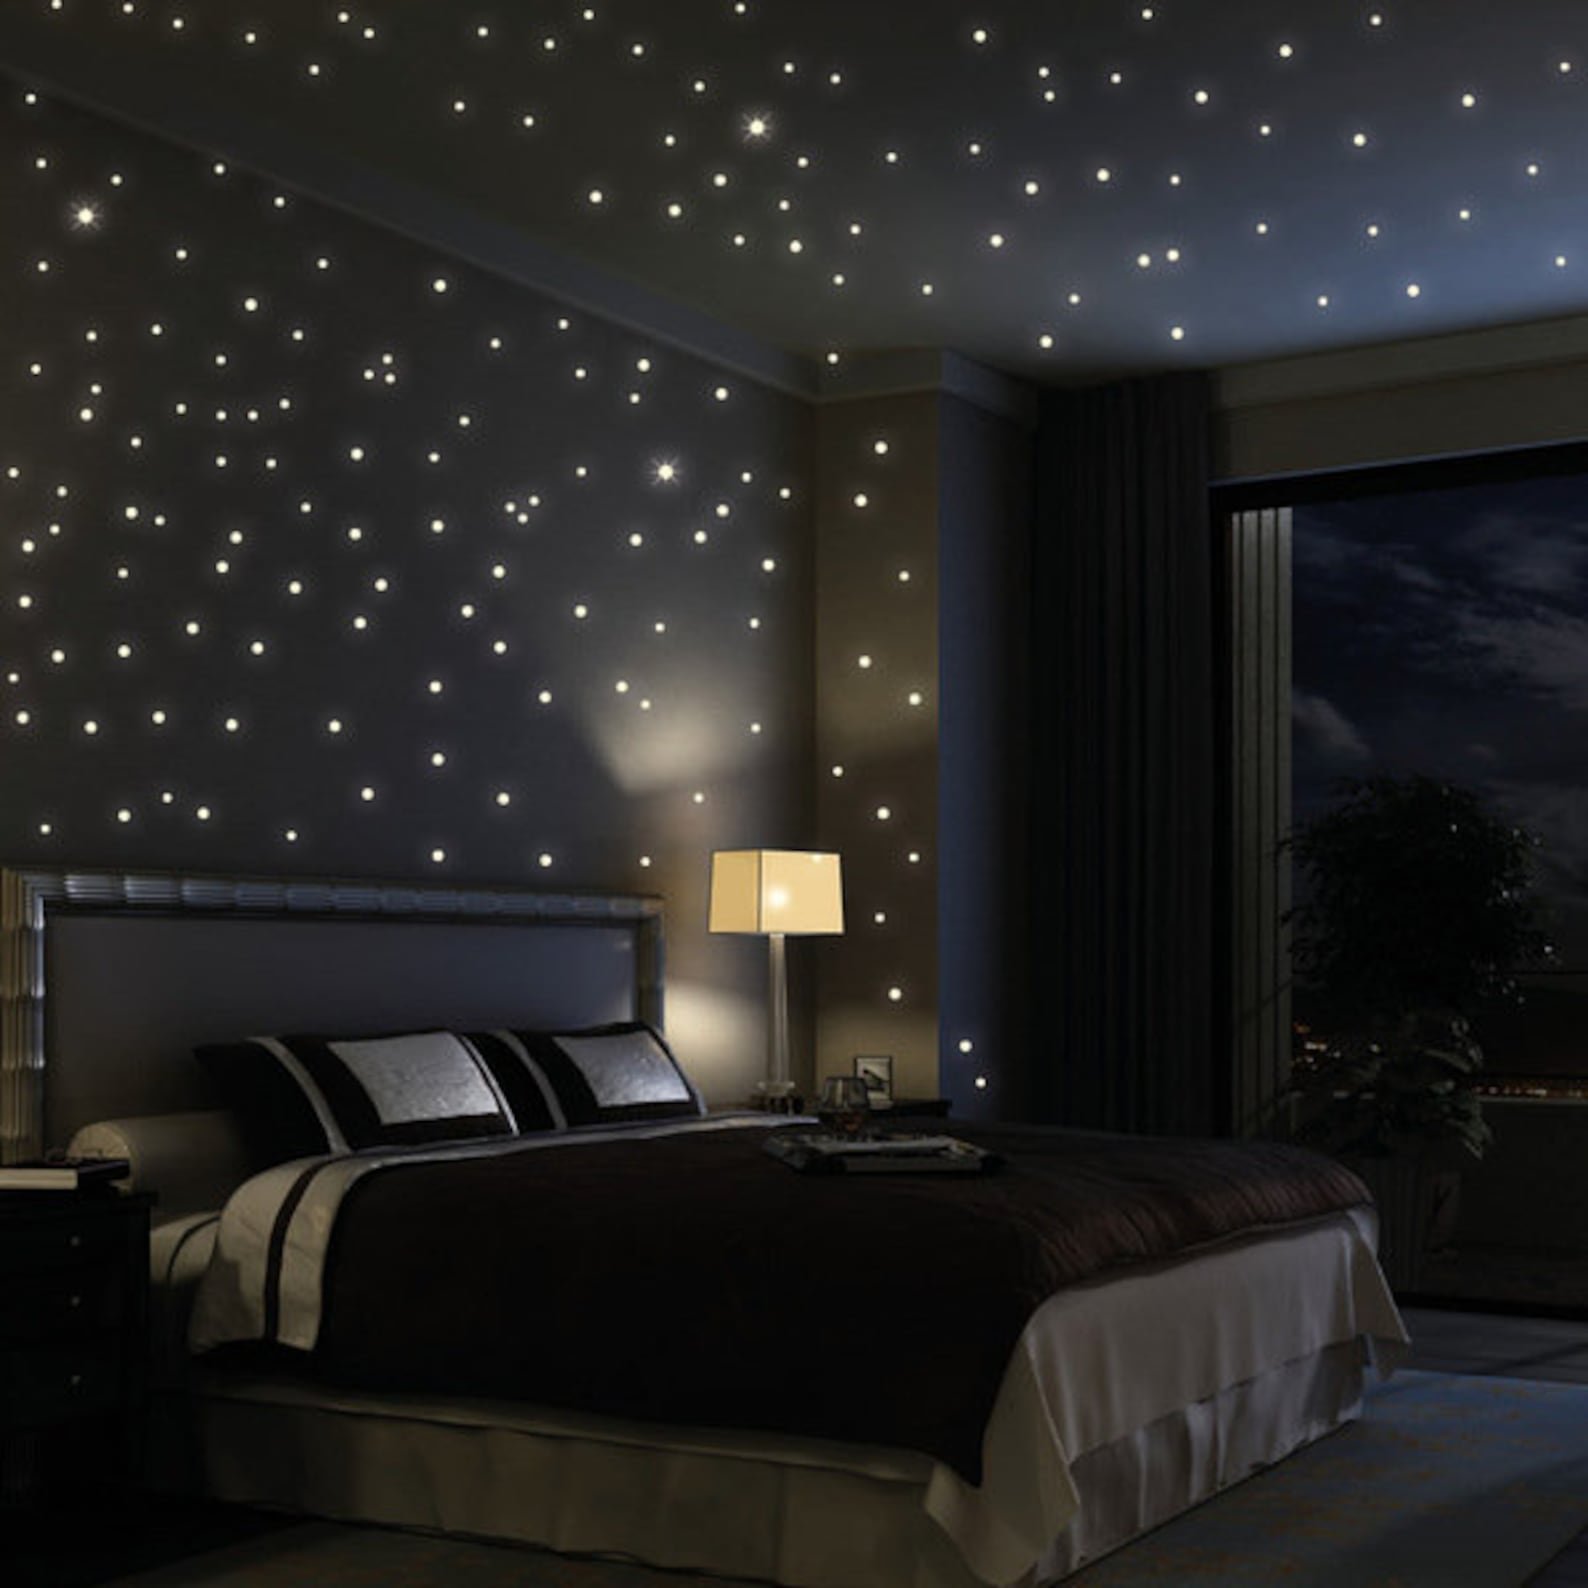 Домашнее звездное небо. Потолок звездное небо. Потолок звездное небо в спальне. Звездное небо в комнате. Звездный потолок в спальне.